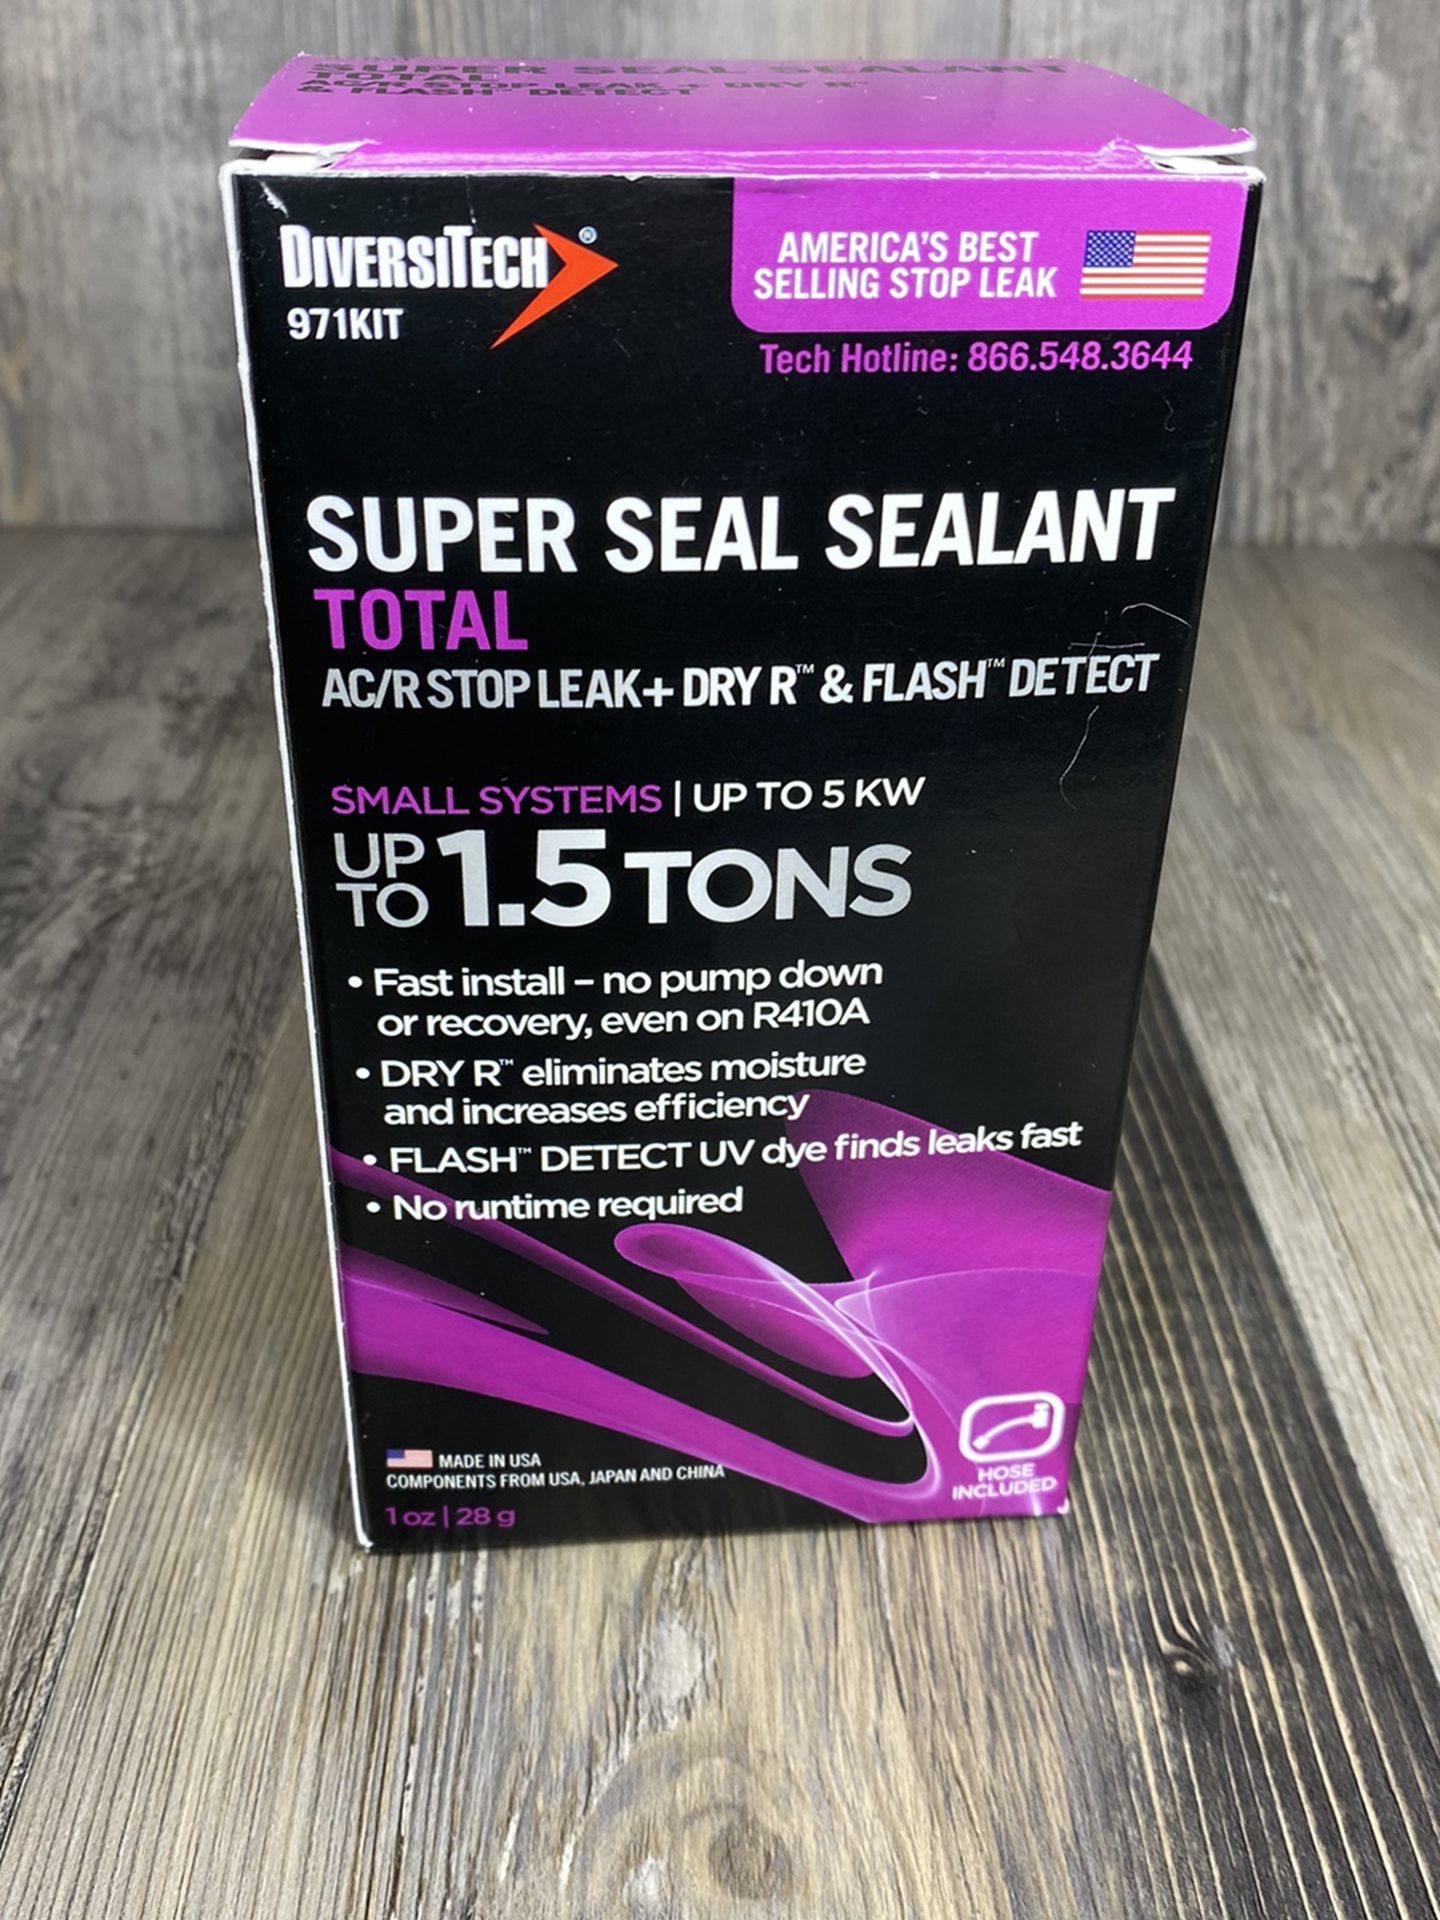 Cliplight Mfg Co Super Seal Total 971KIT Sealant Preventative Maintenance